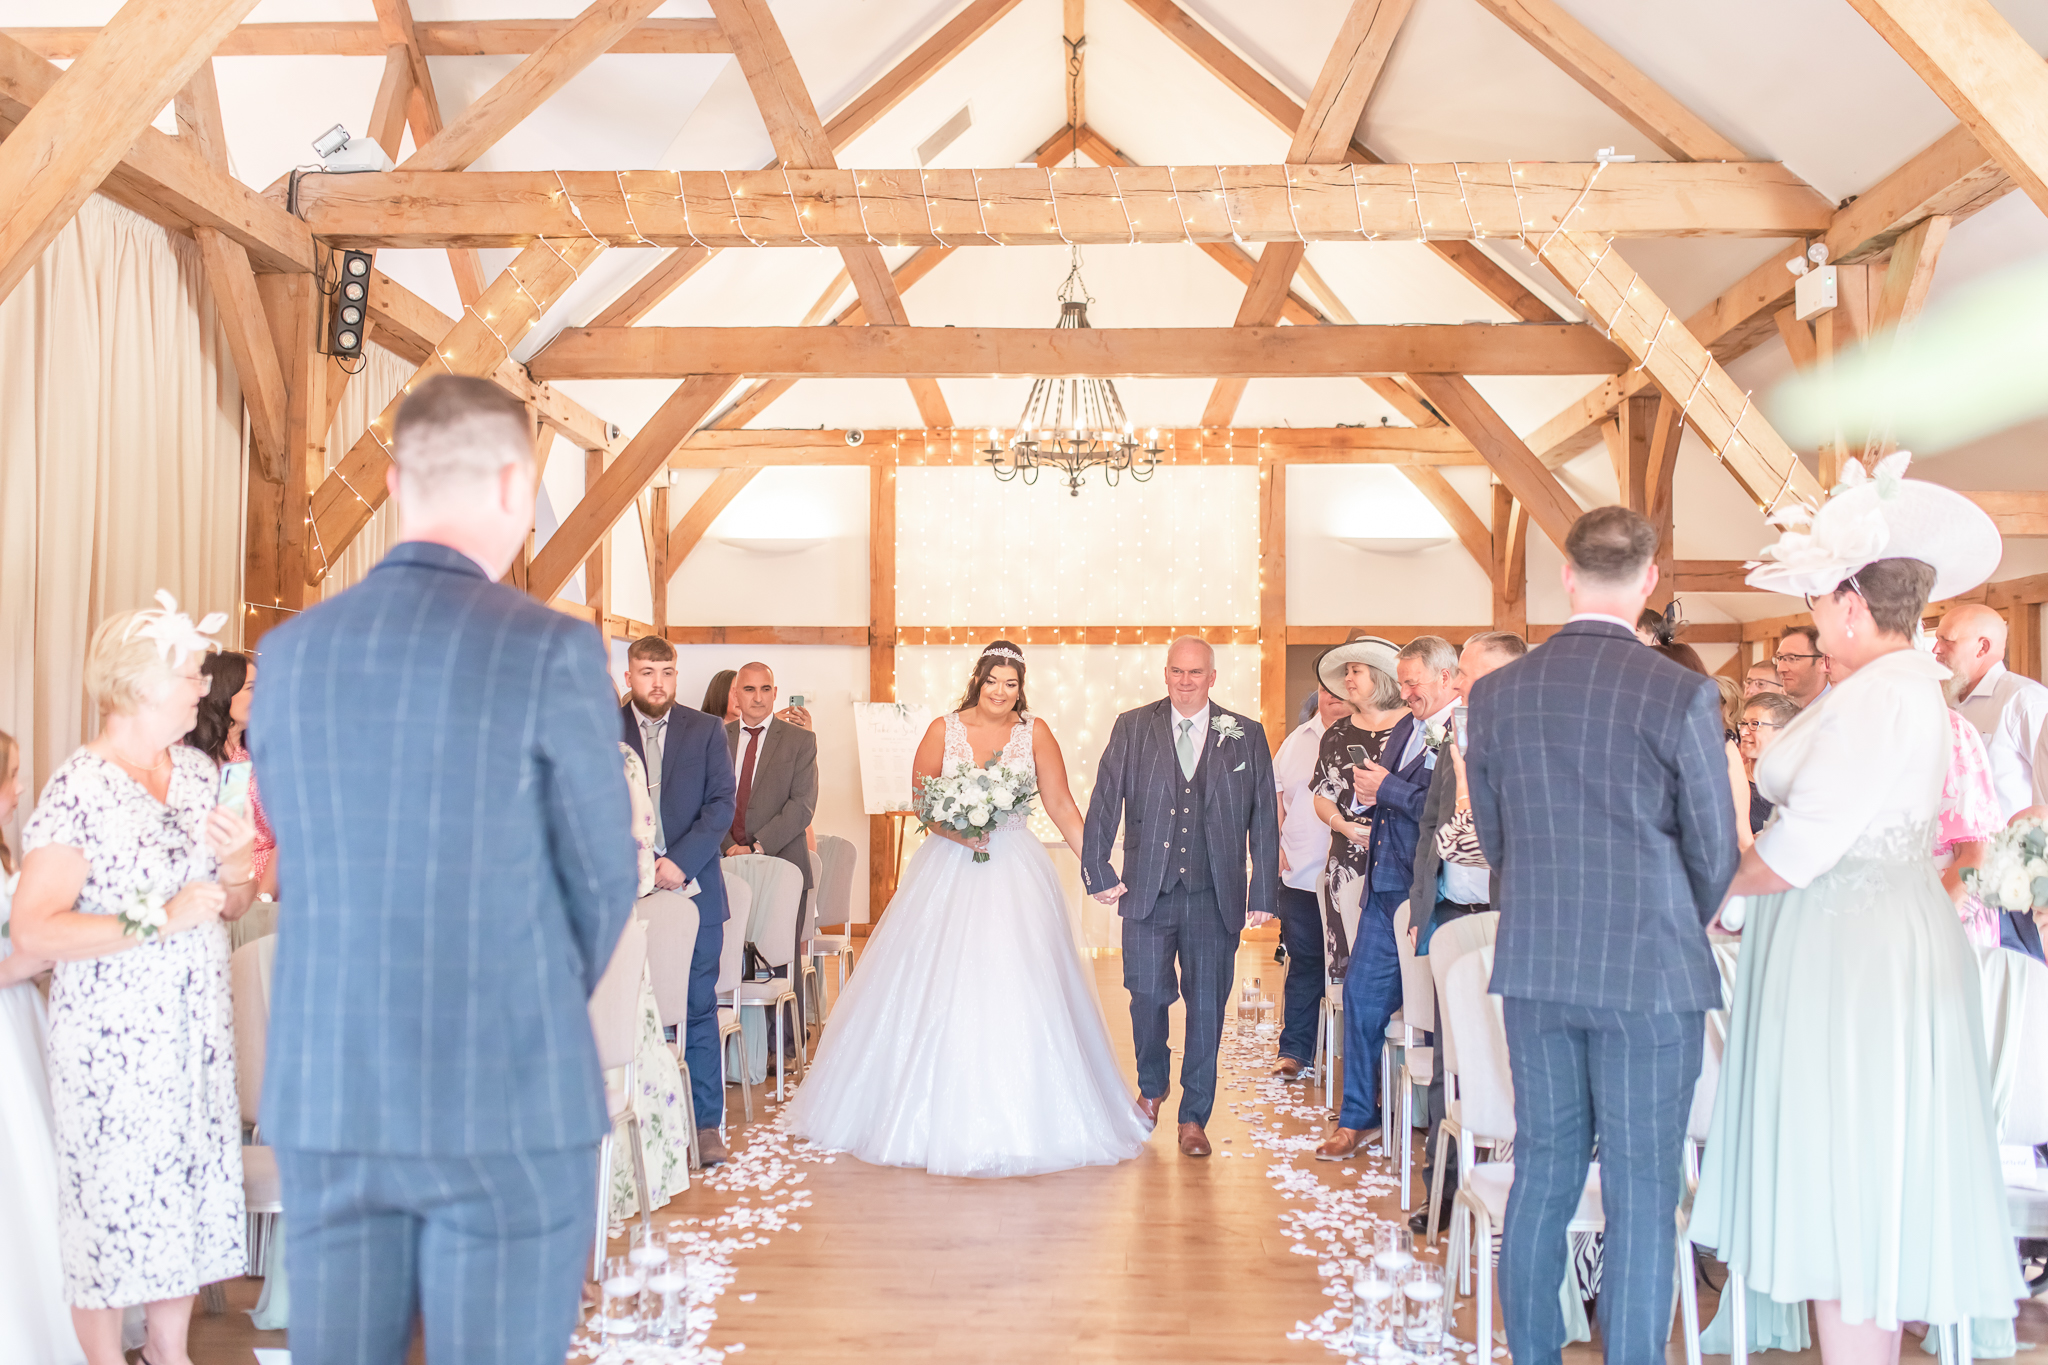 Aimee walking down the aisle at rustic wedding venue Sandhole Oak Wedding Barn, captured by Cheshire wedding photographer, Sophie Siddons